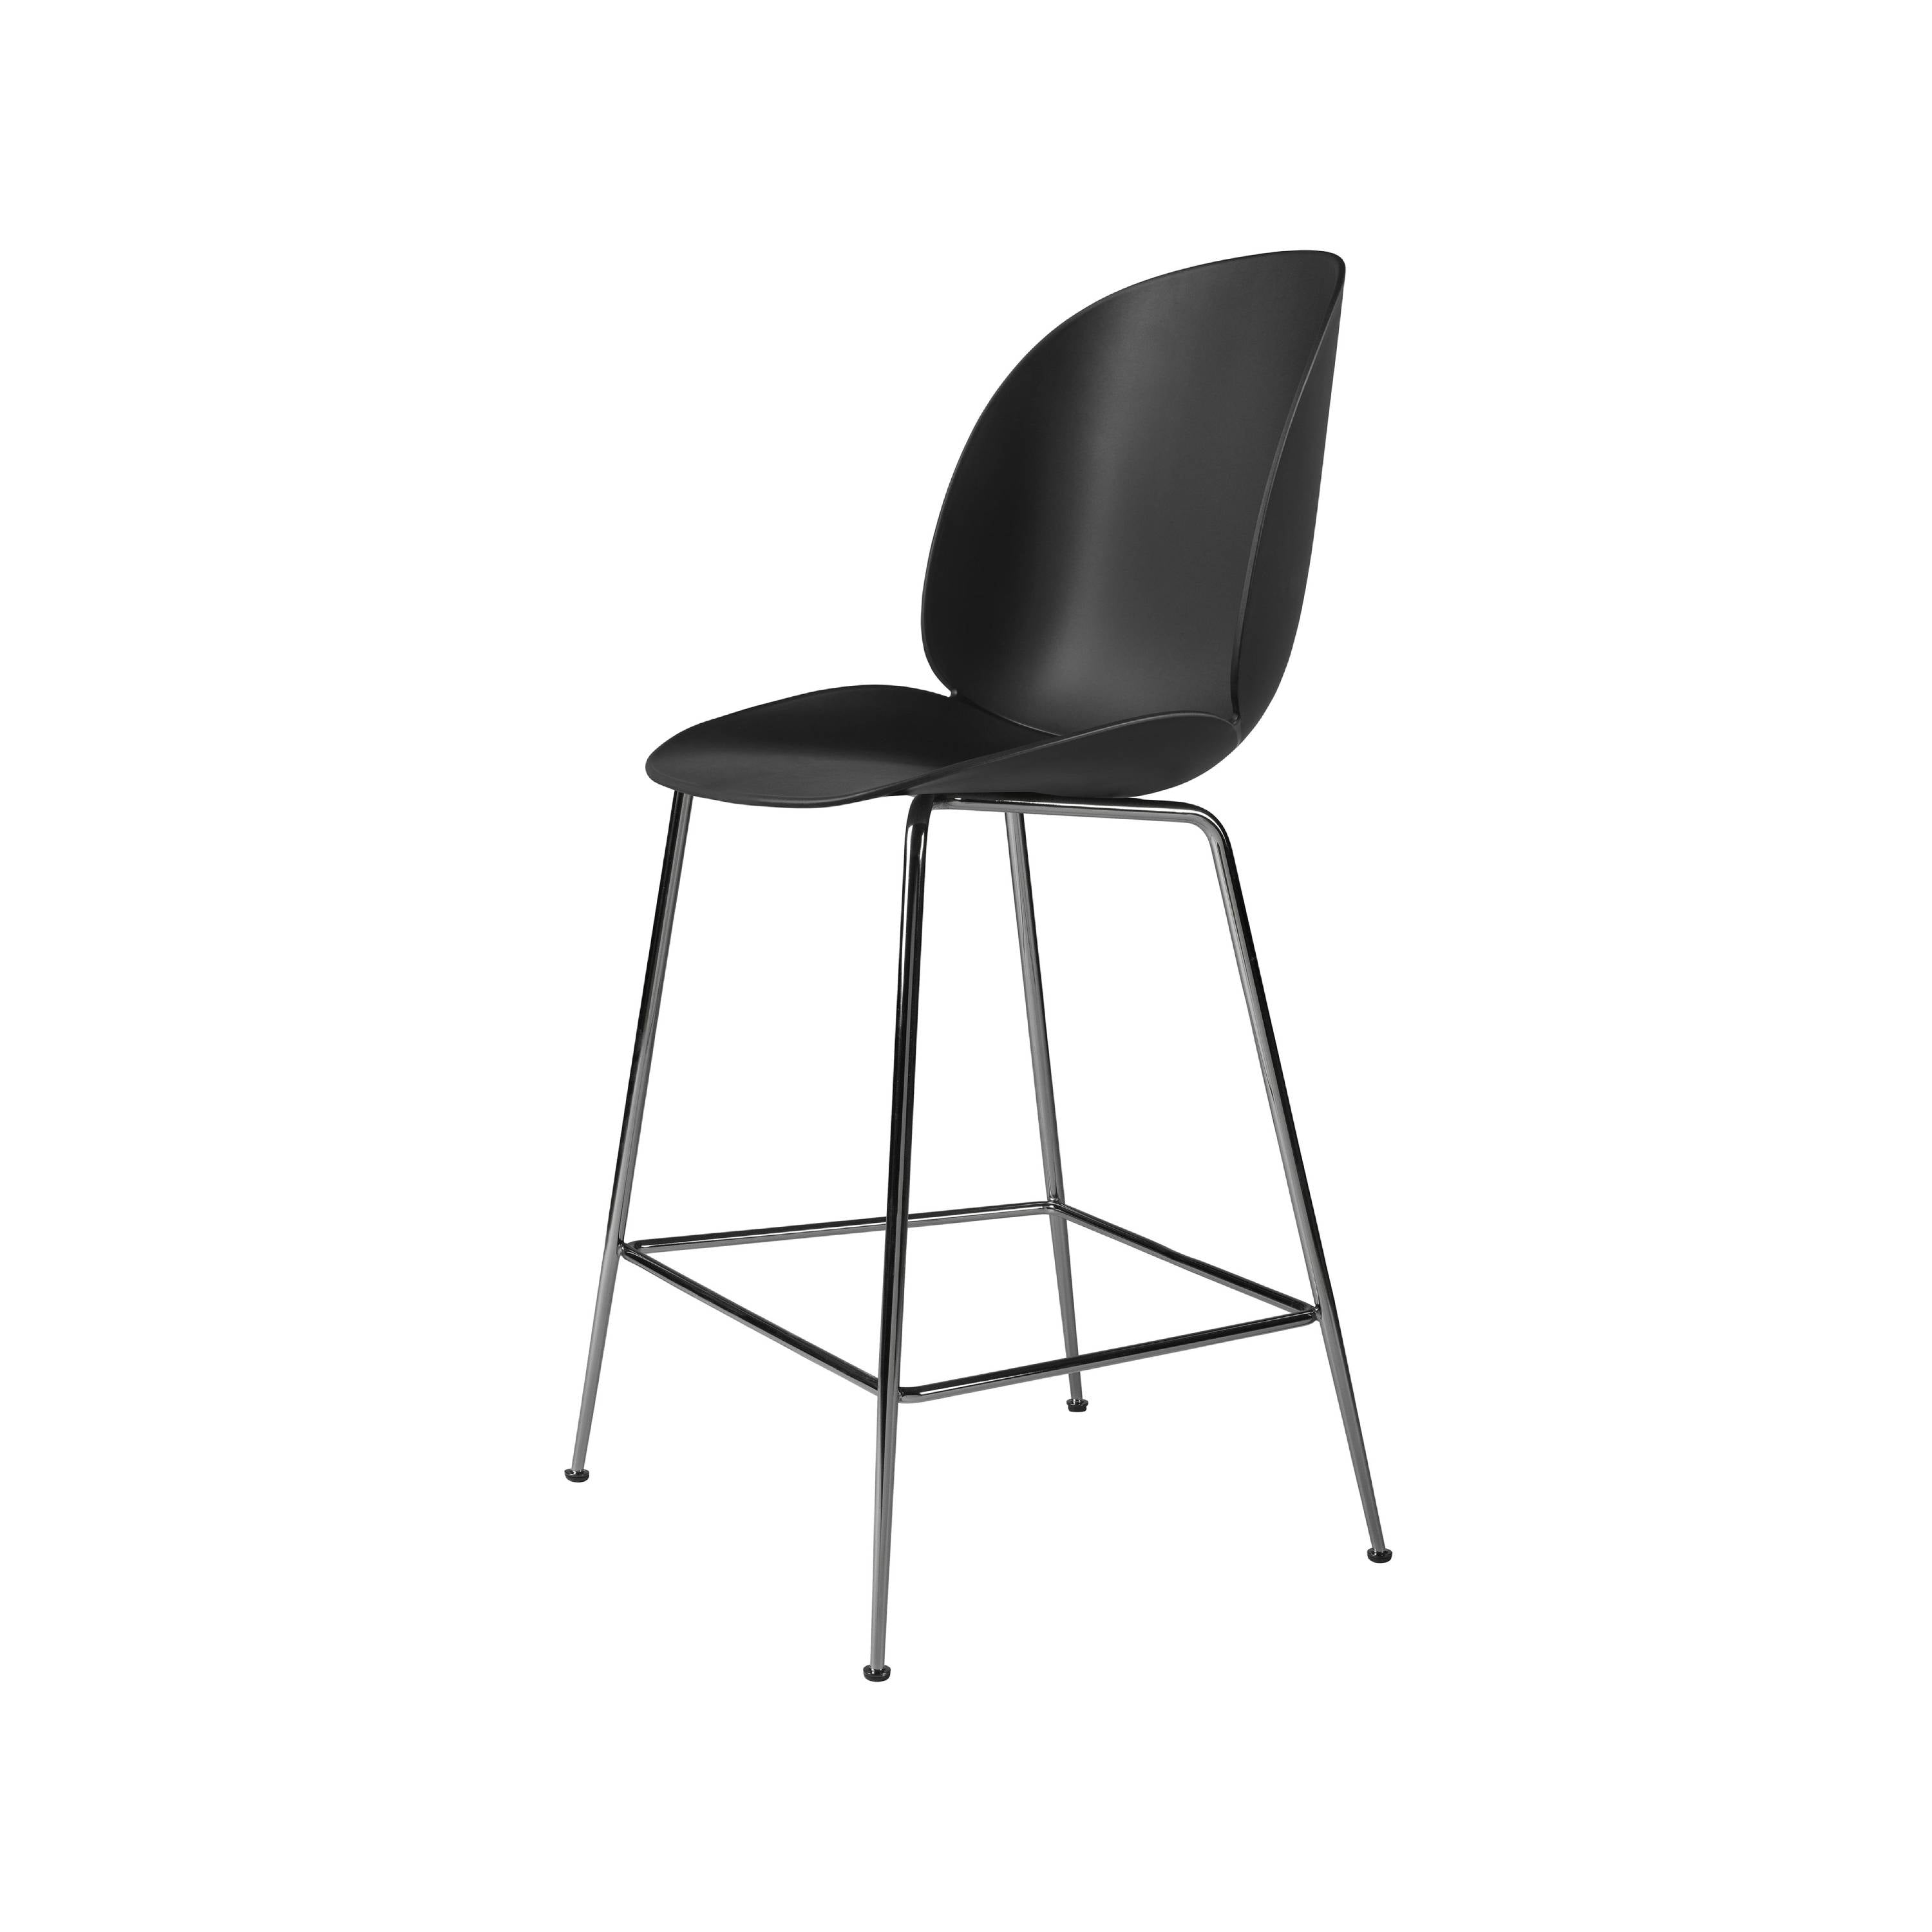 Beetle Bar + Counter Chair: Felt Glides + Counter + Black + Black Chrome